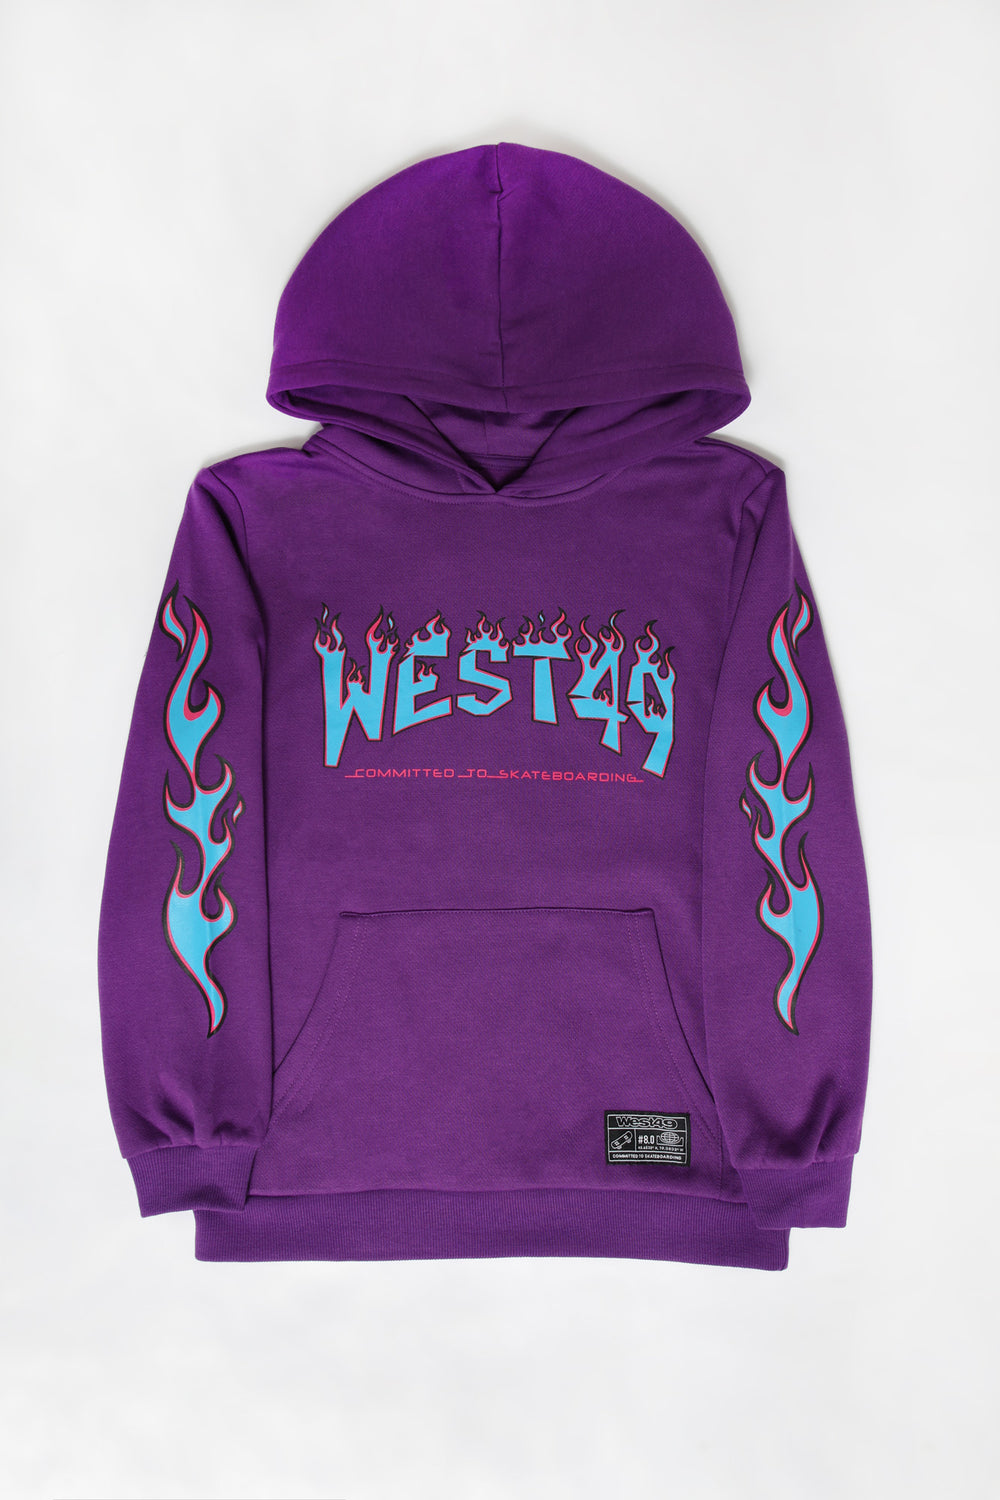 West49 Youth Flame Hoodie Purple